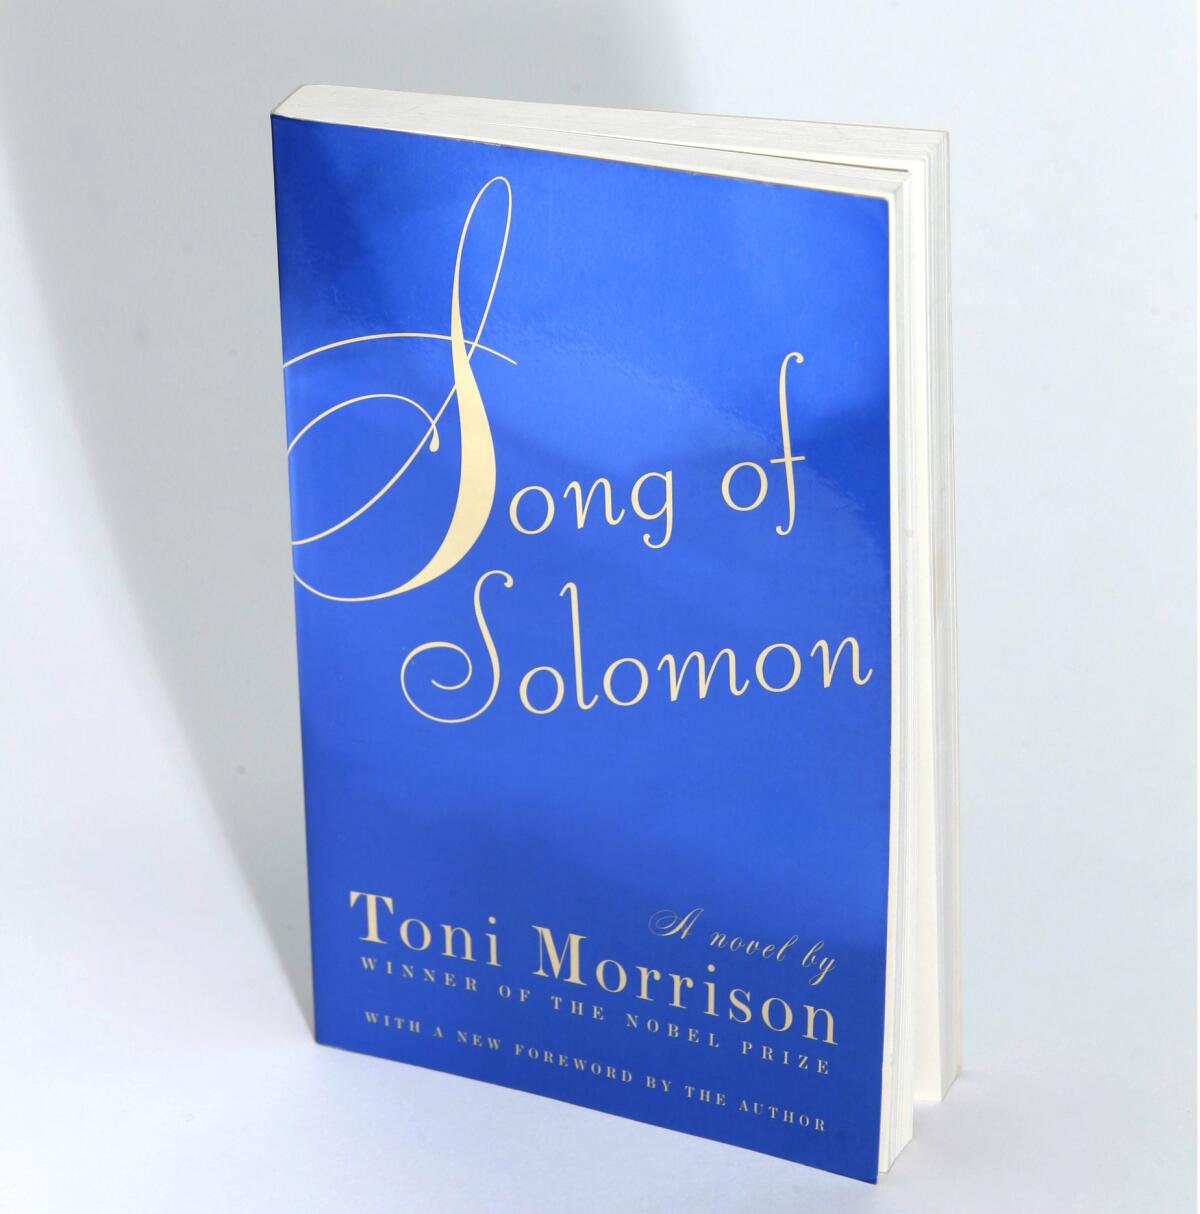 "Song of Solomon" by Toni Morrison.